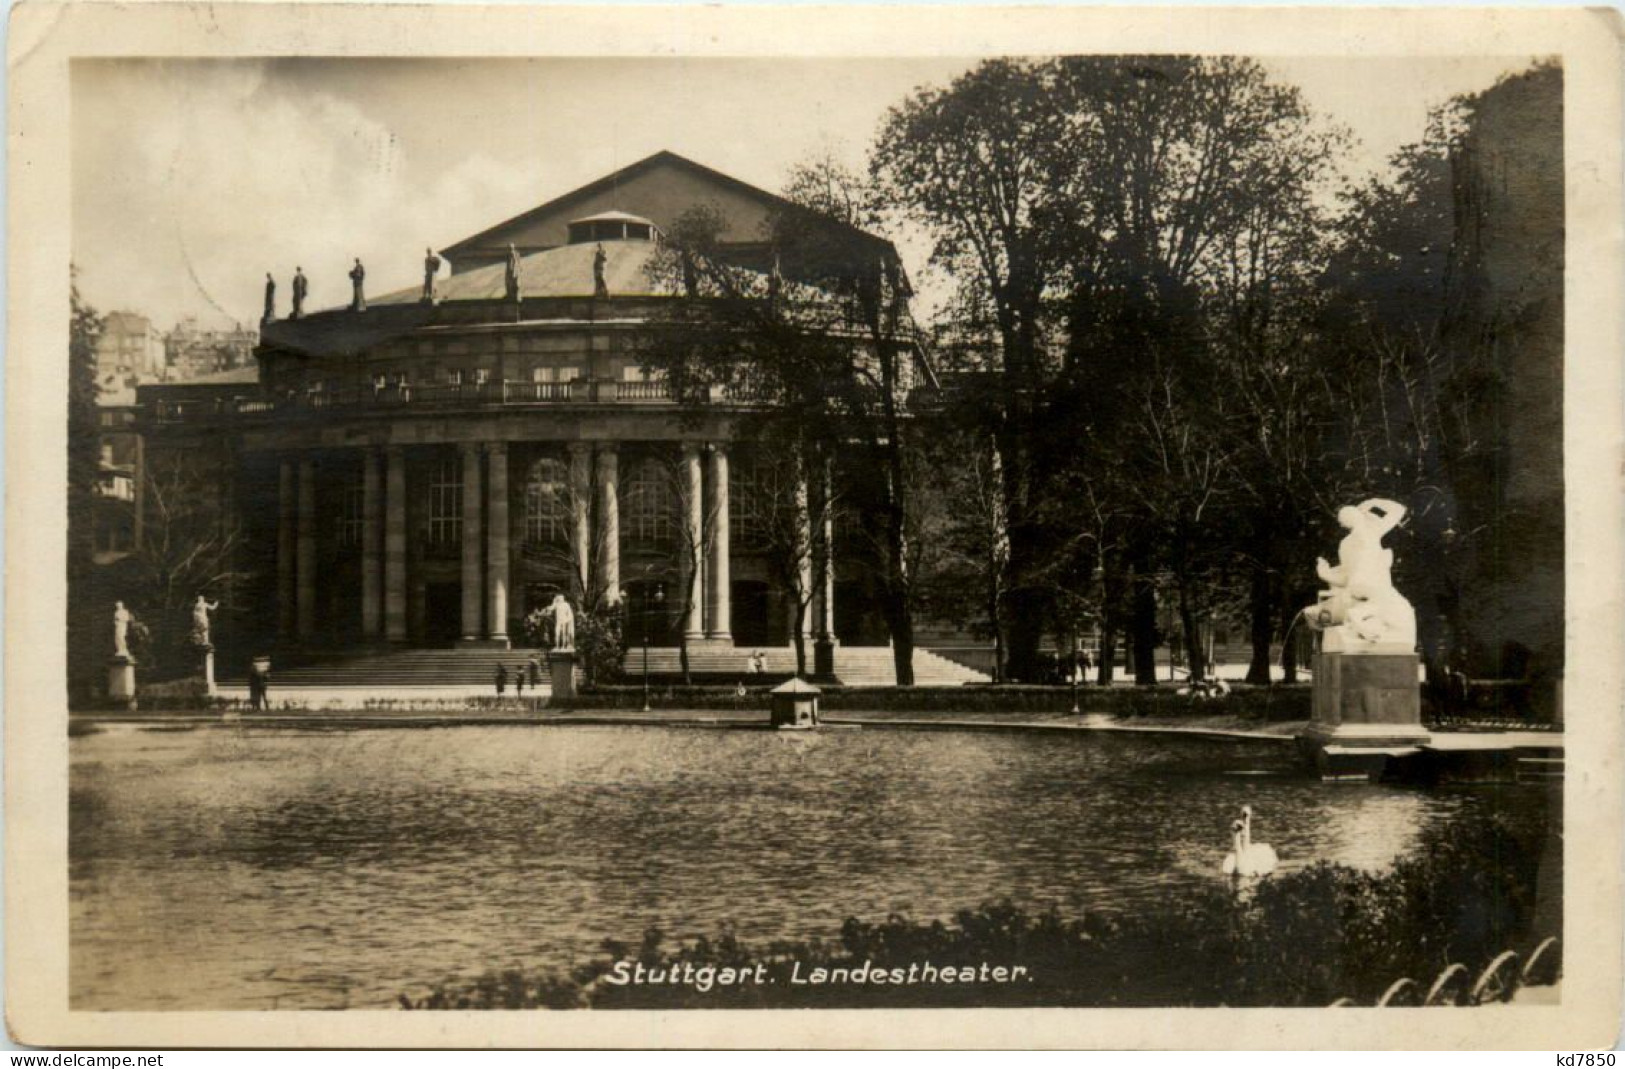 Stuttgart, Landestheater - Stuttgart